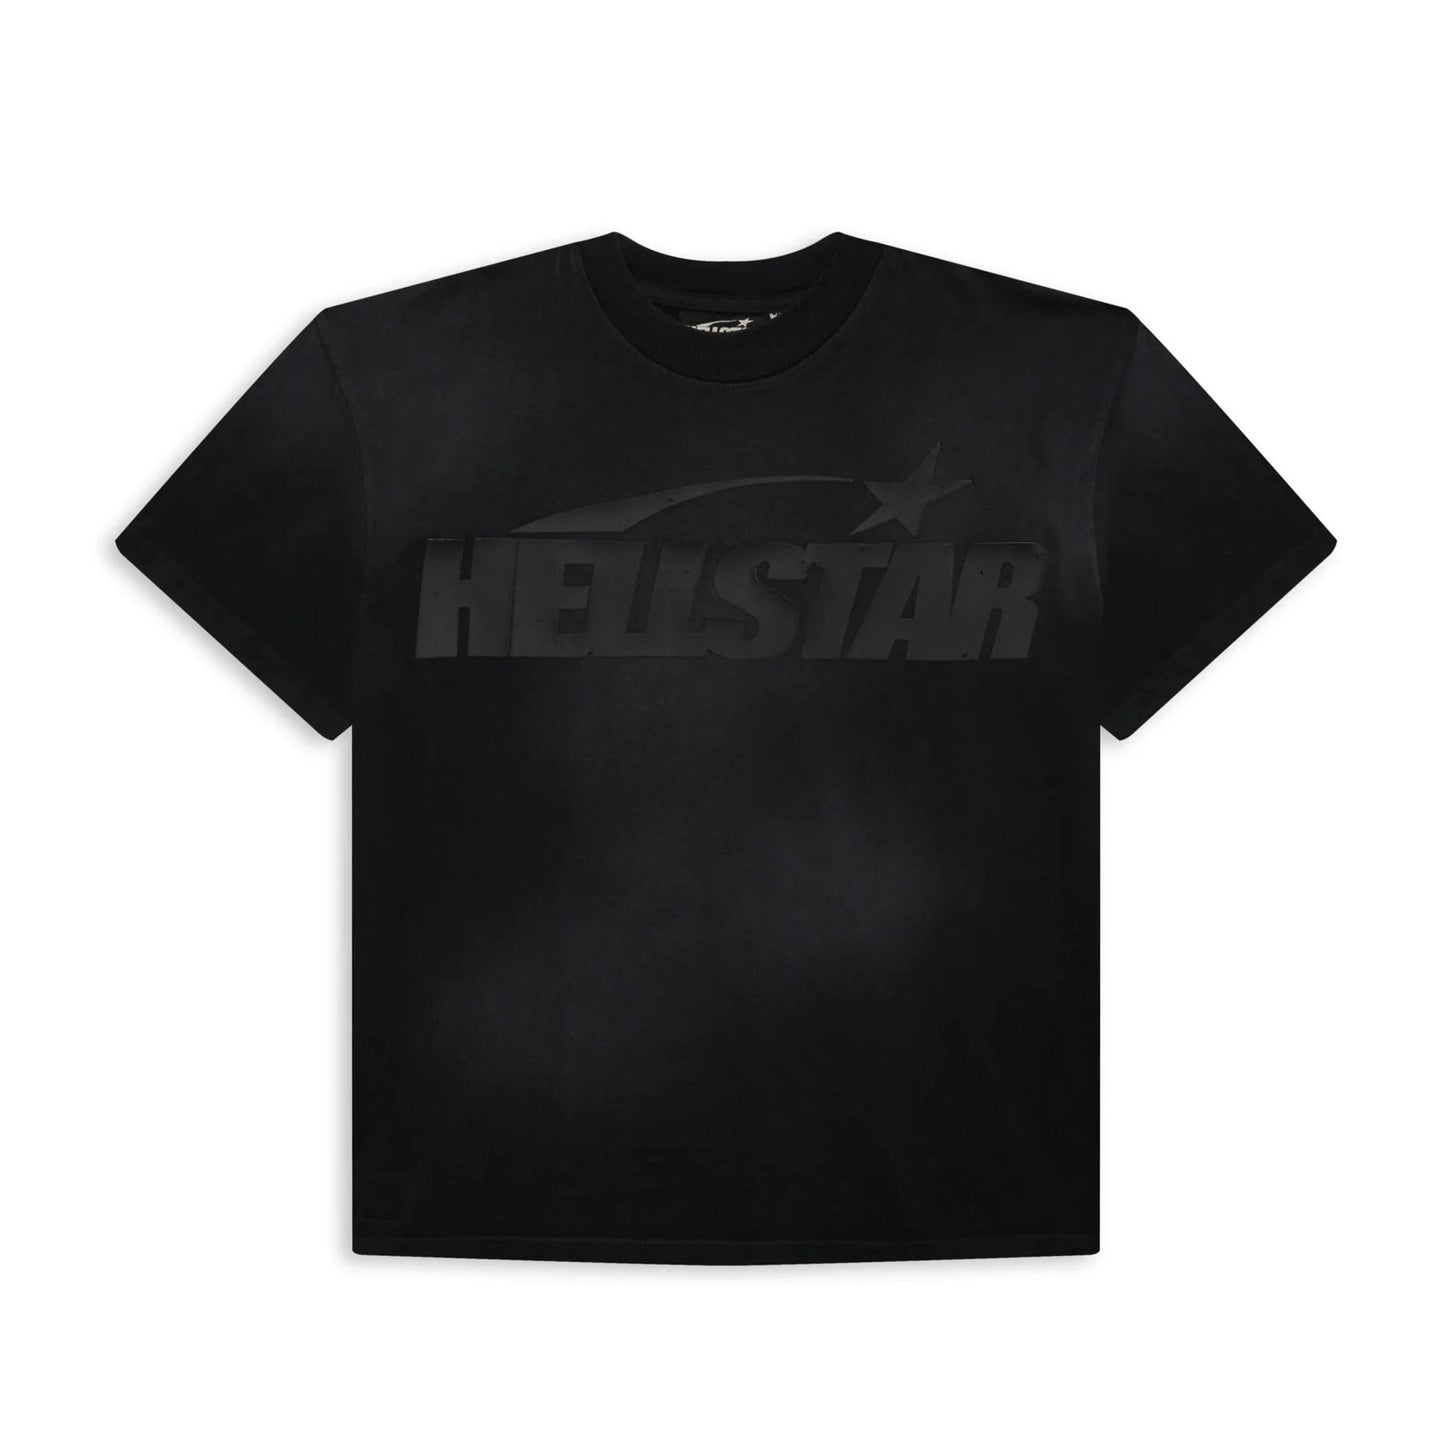 Hellstar Cracked T-Shirt Black - Supra Sneakers